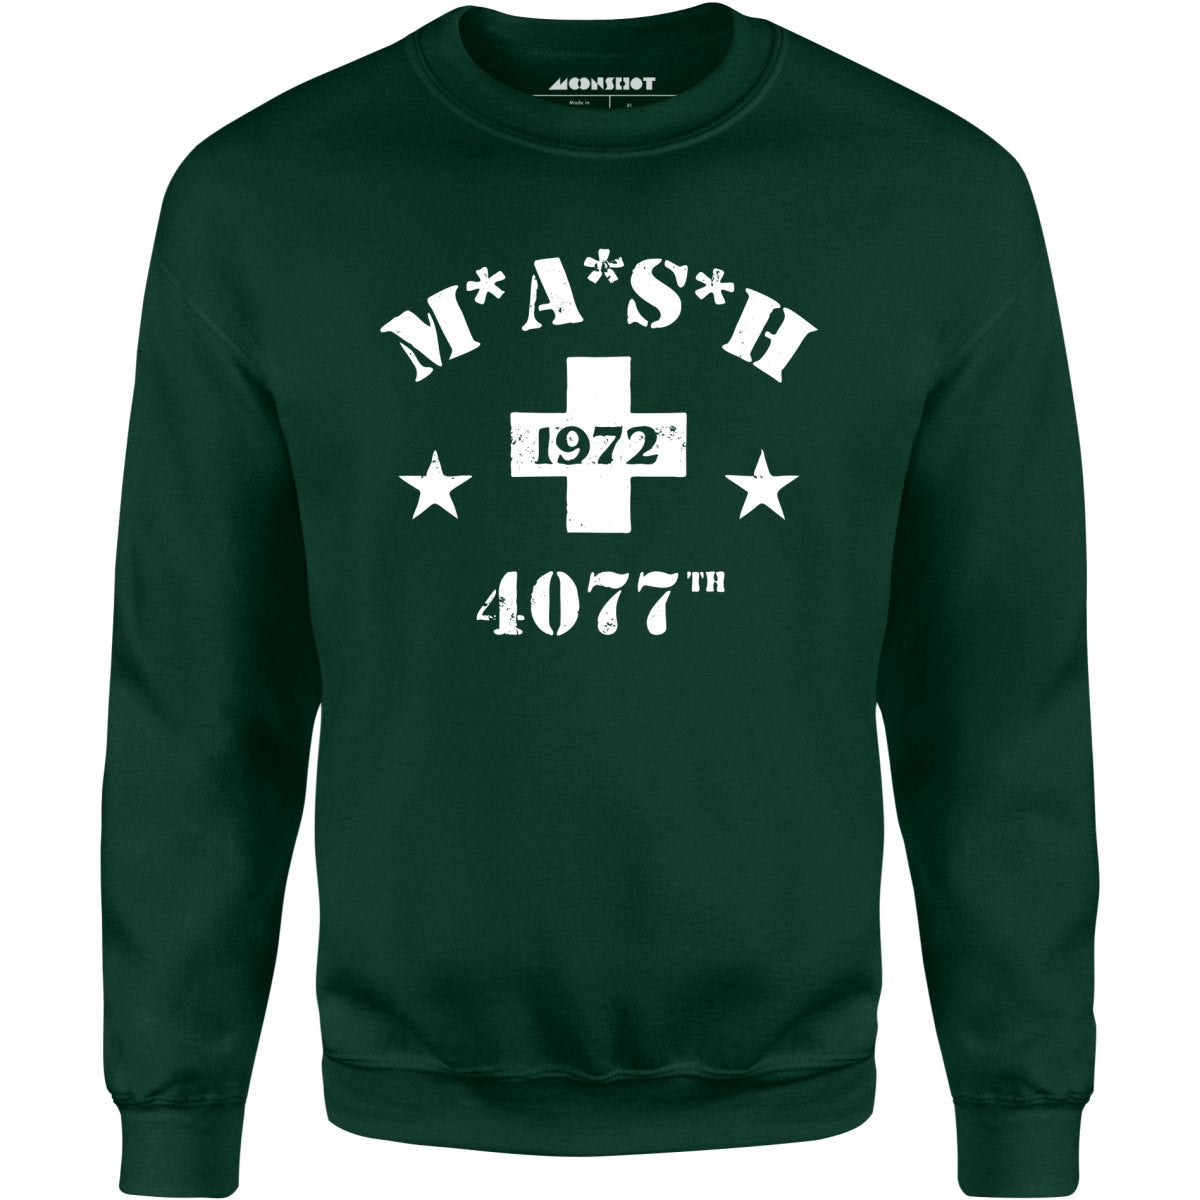 Mash 4077th - Unisex Sweatshirt